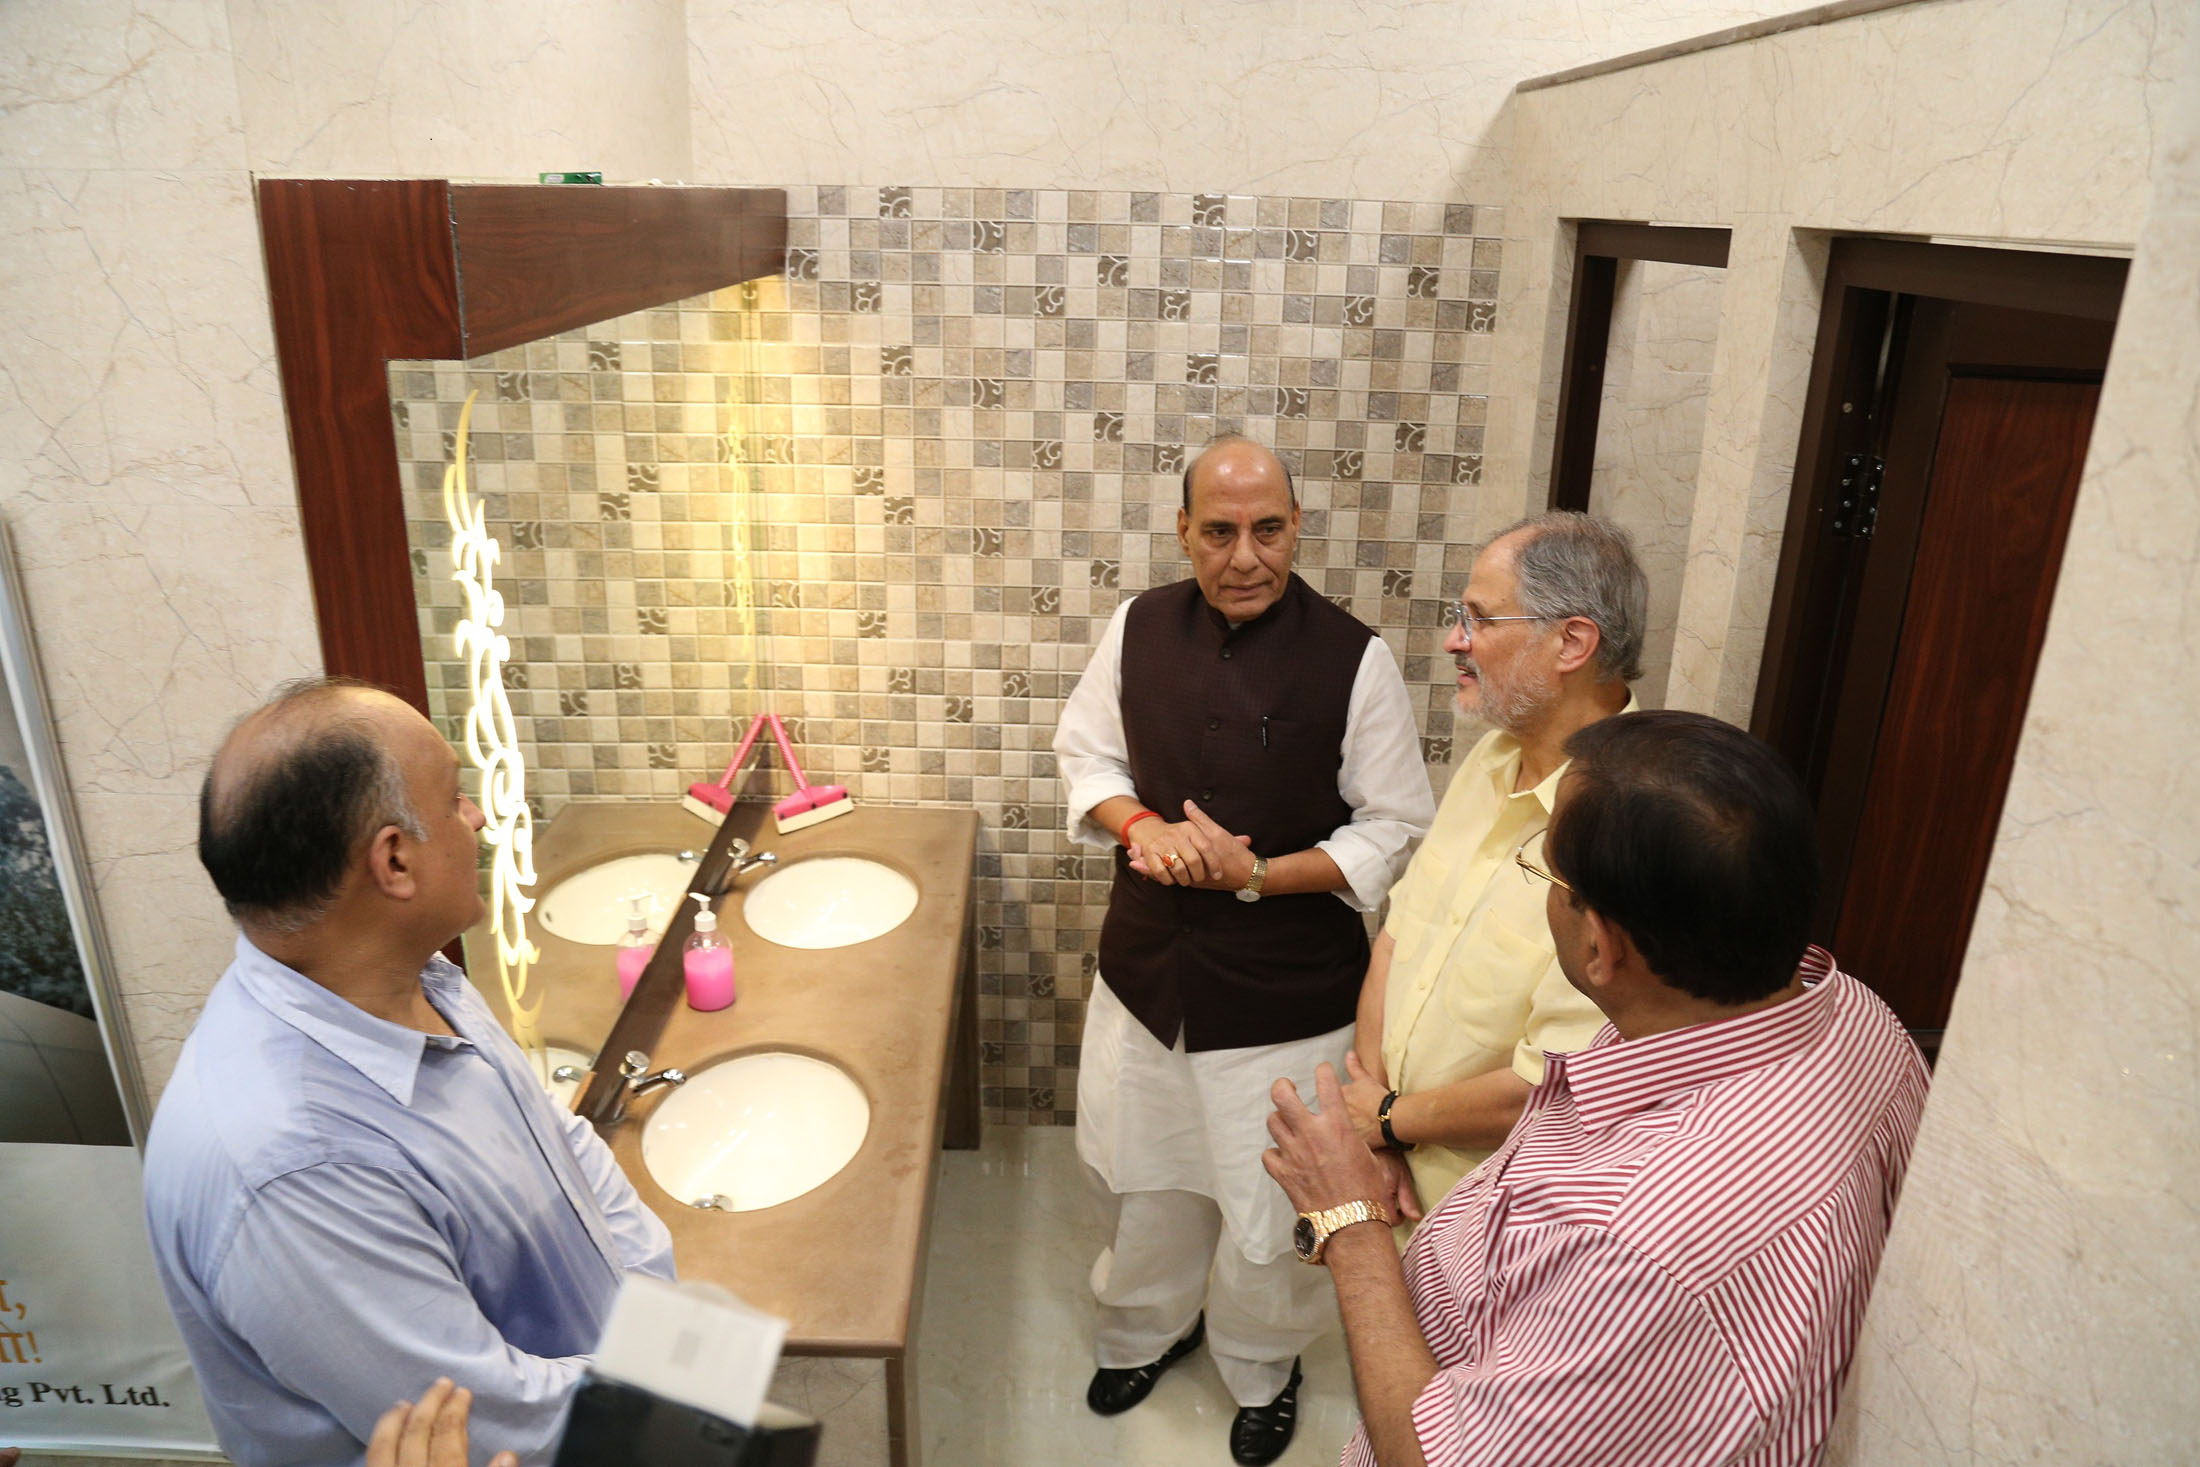 The Union Home Minister, Shri Rajnath Singh inspecting the NDMC's Smart Public Toilet Utility at Rafi Marg-Chelmsford Club, in New Delhi on October 02, 2016. The Lt. Governor of Delhi, Shri Najeeb Jung and the NDMC Chairman, Shri Naresh Kumar are also seen.